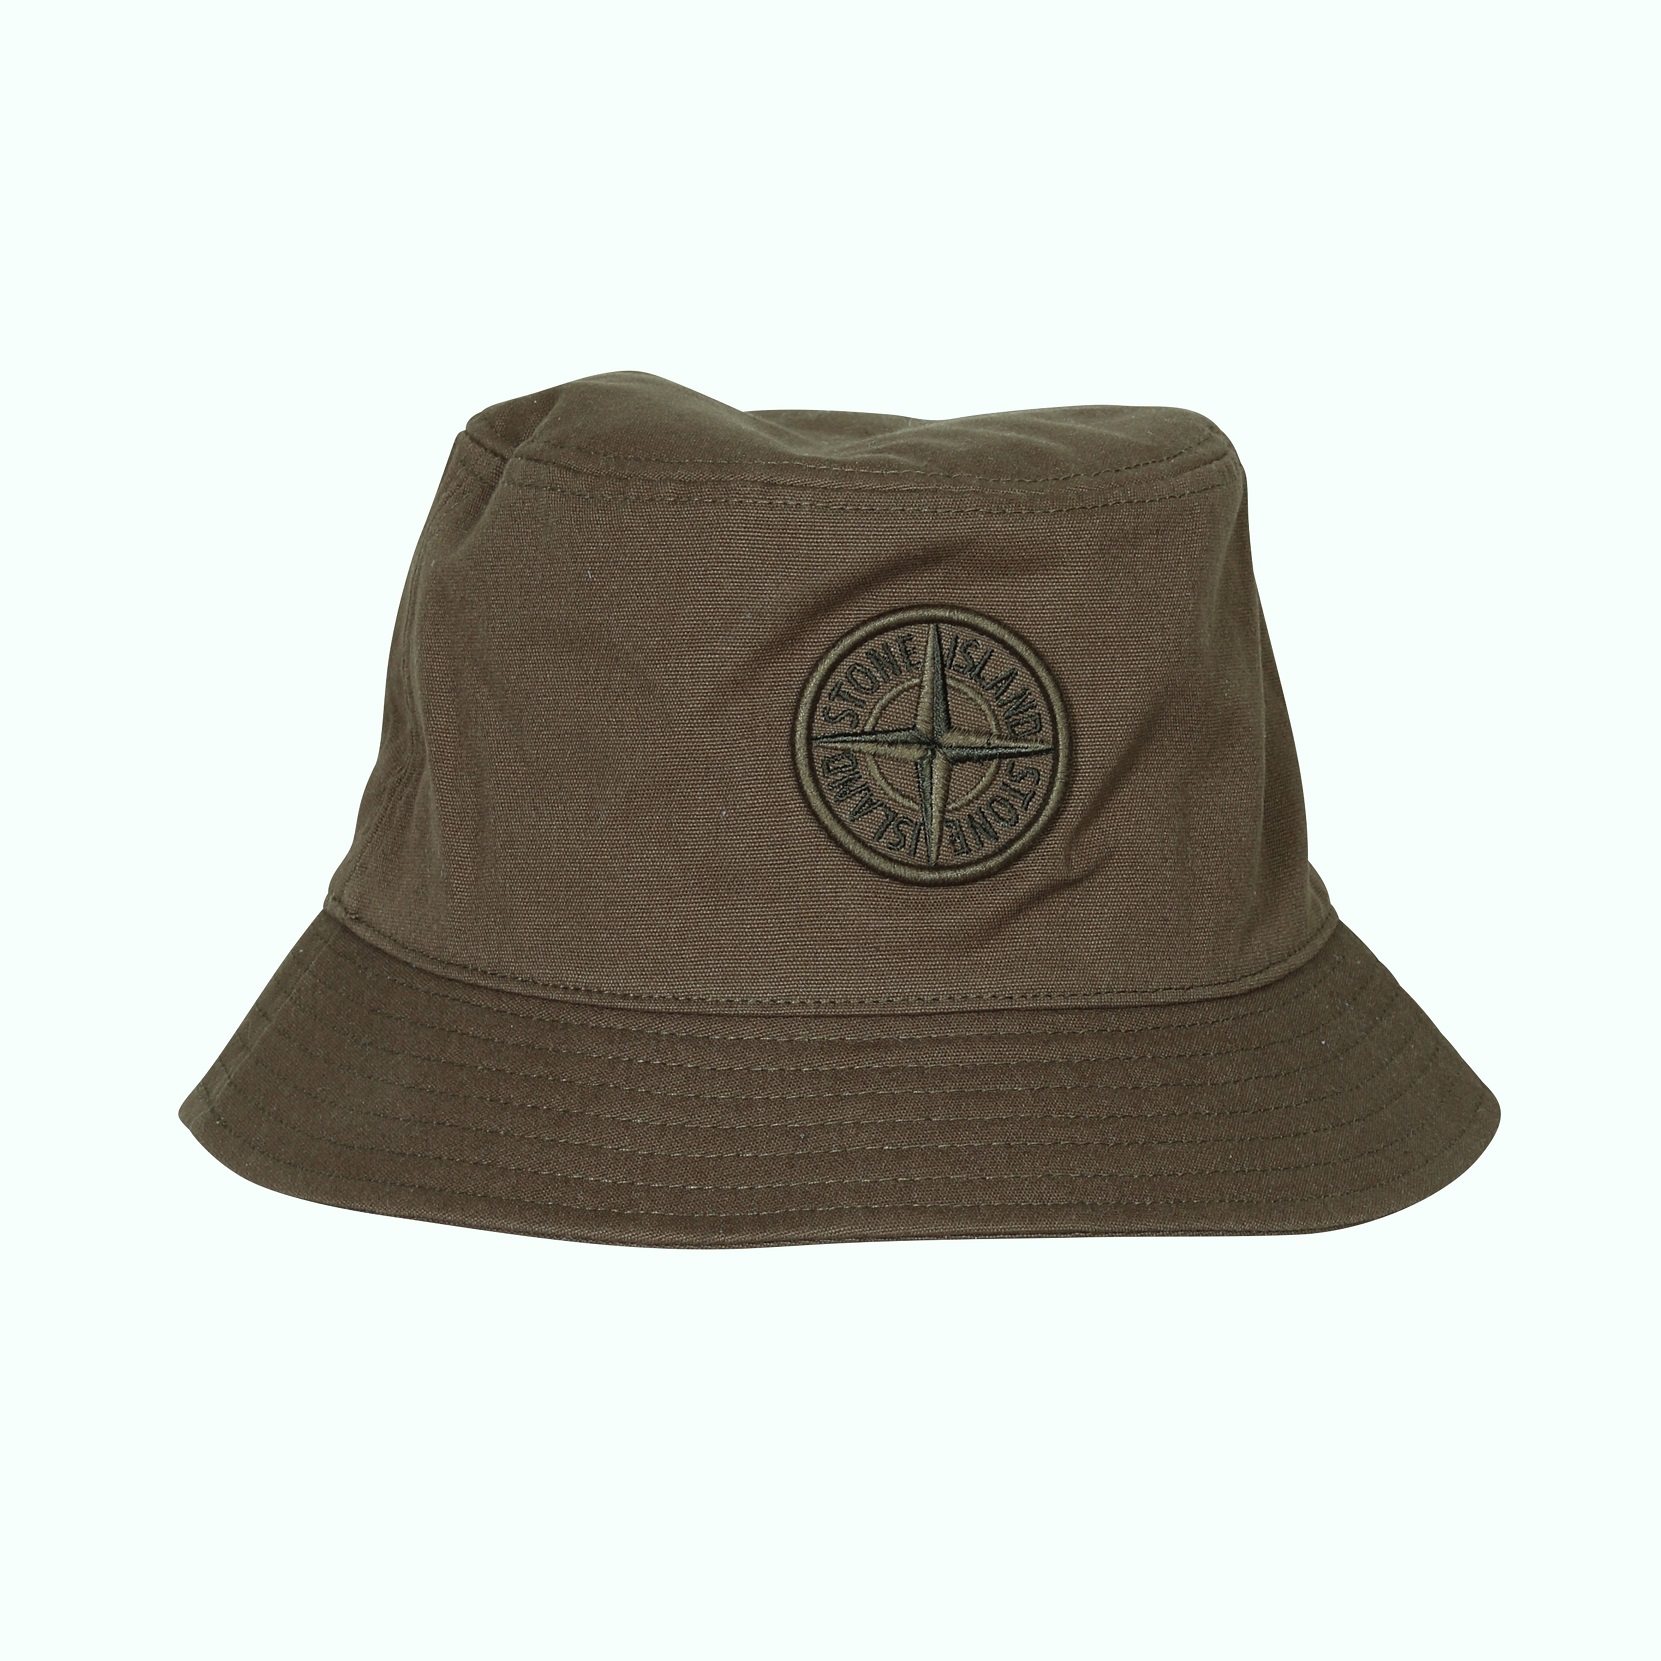 STONE ISLAND Bucket Hat in Military Green L